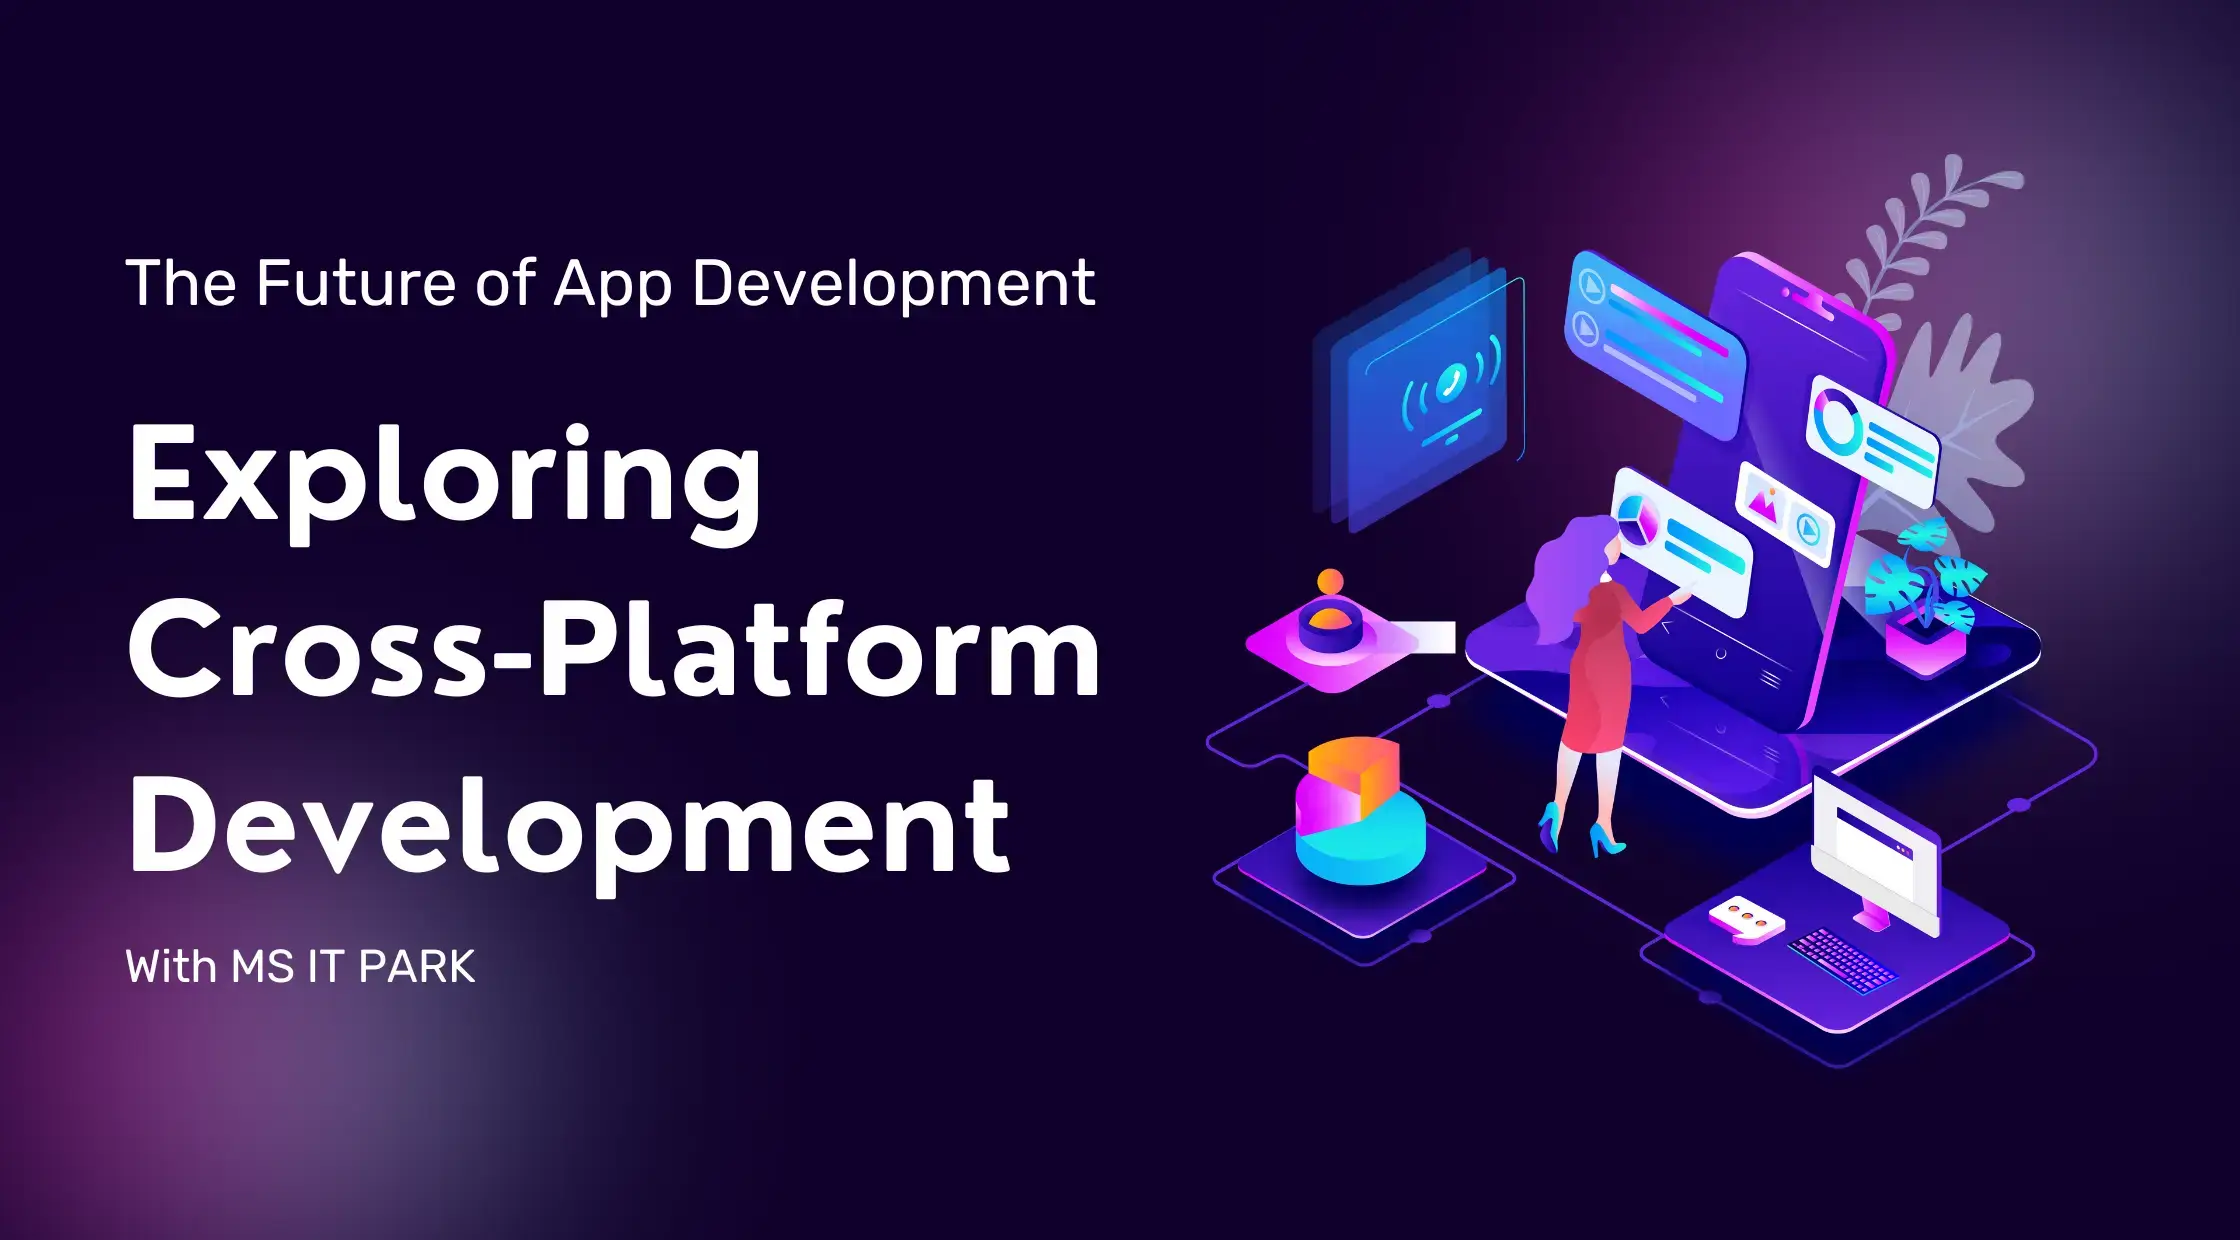 The Future of App Development: Exploring Cross-Platform Development with MS IT PARK